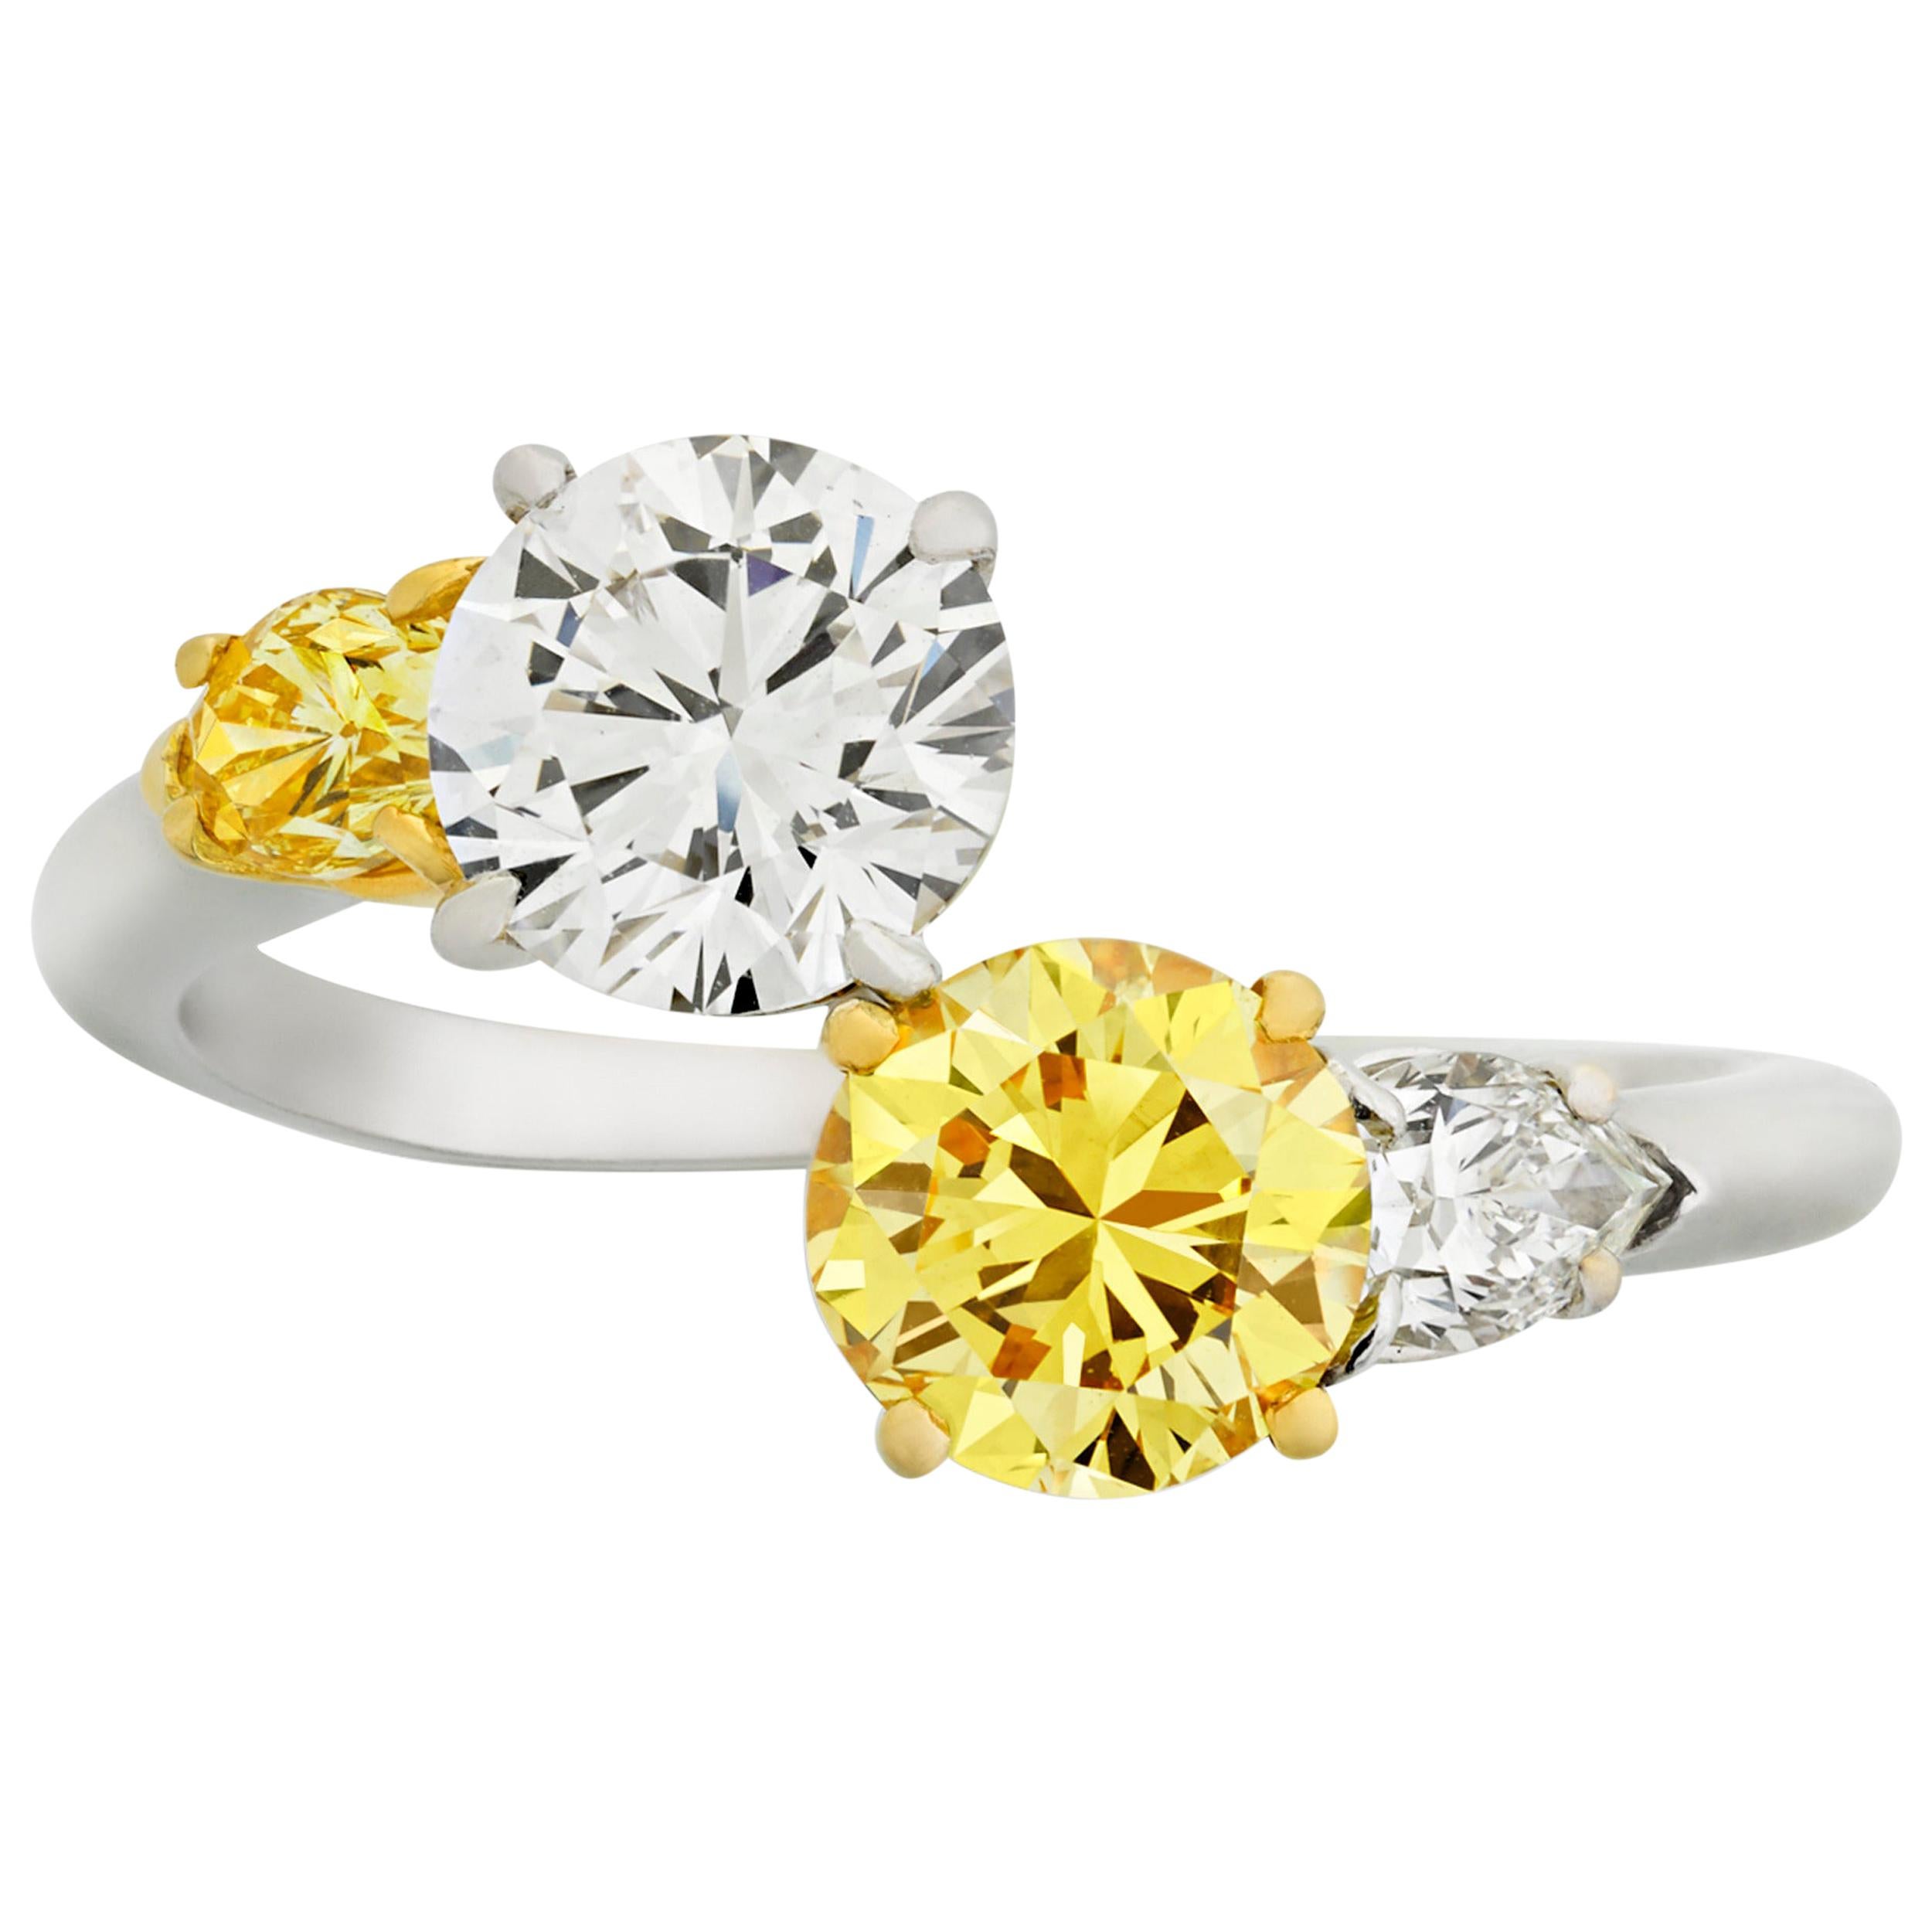 Vivid Yellow and White Diamond Bypass Ring, 1.94 Carat